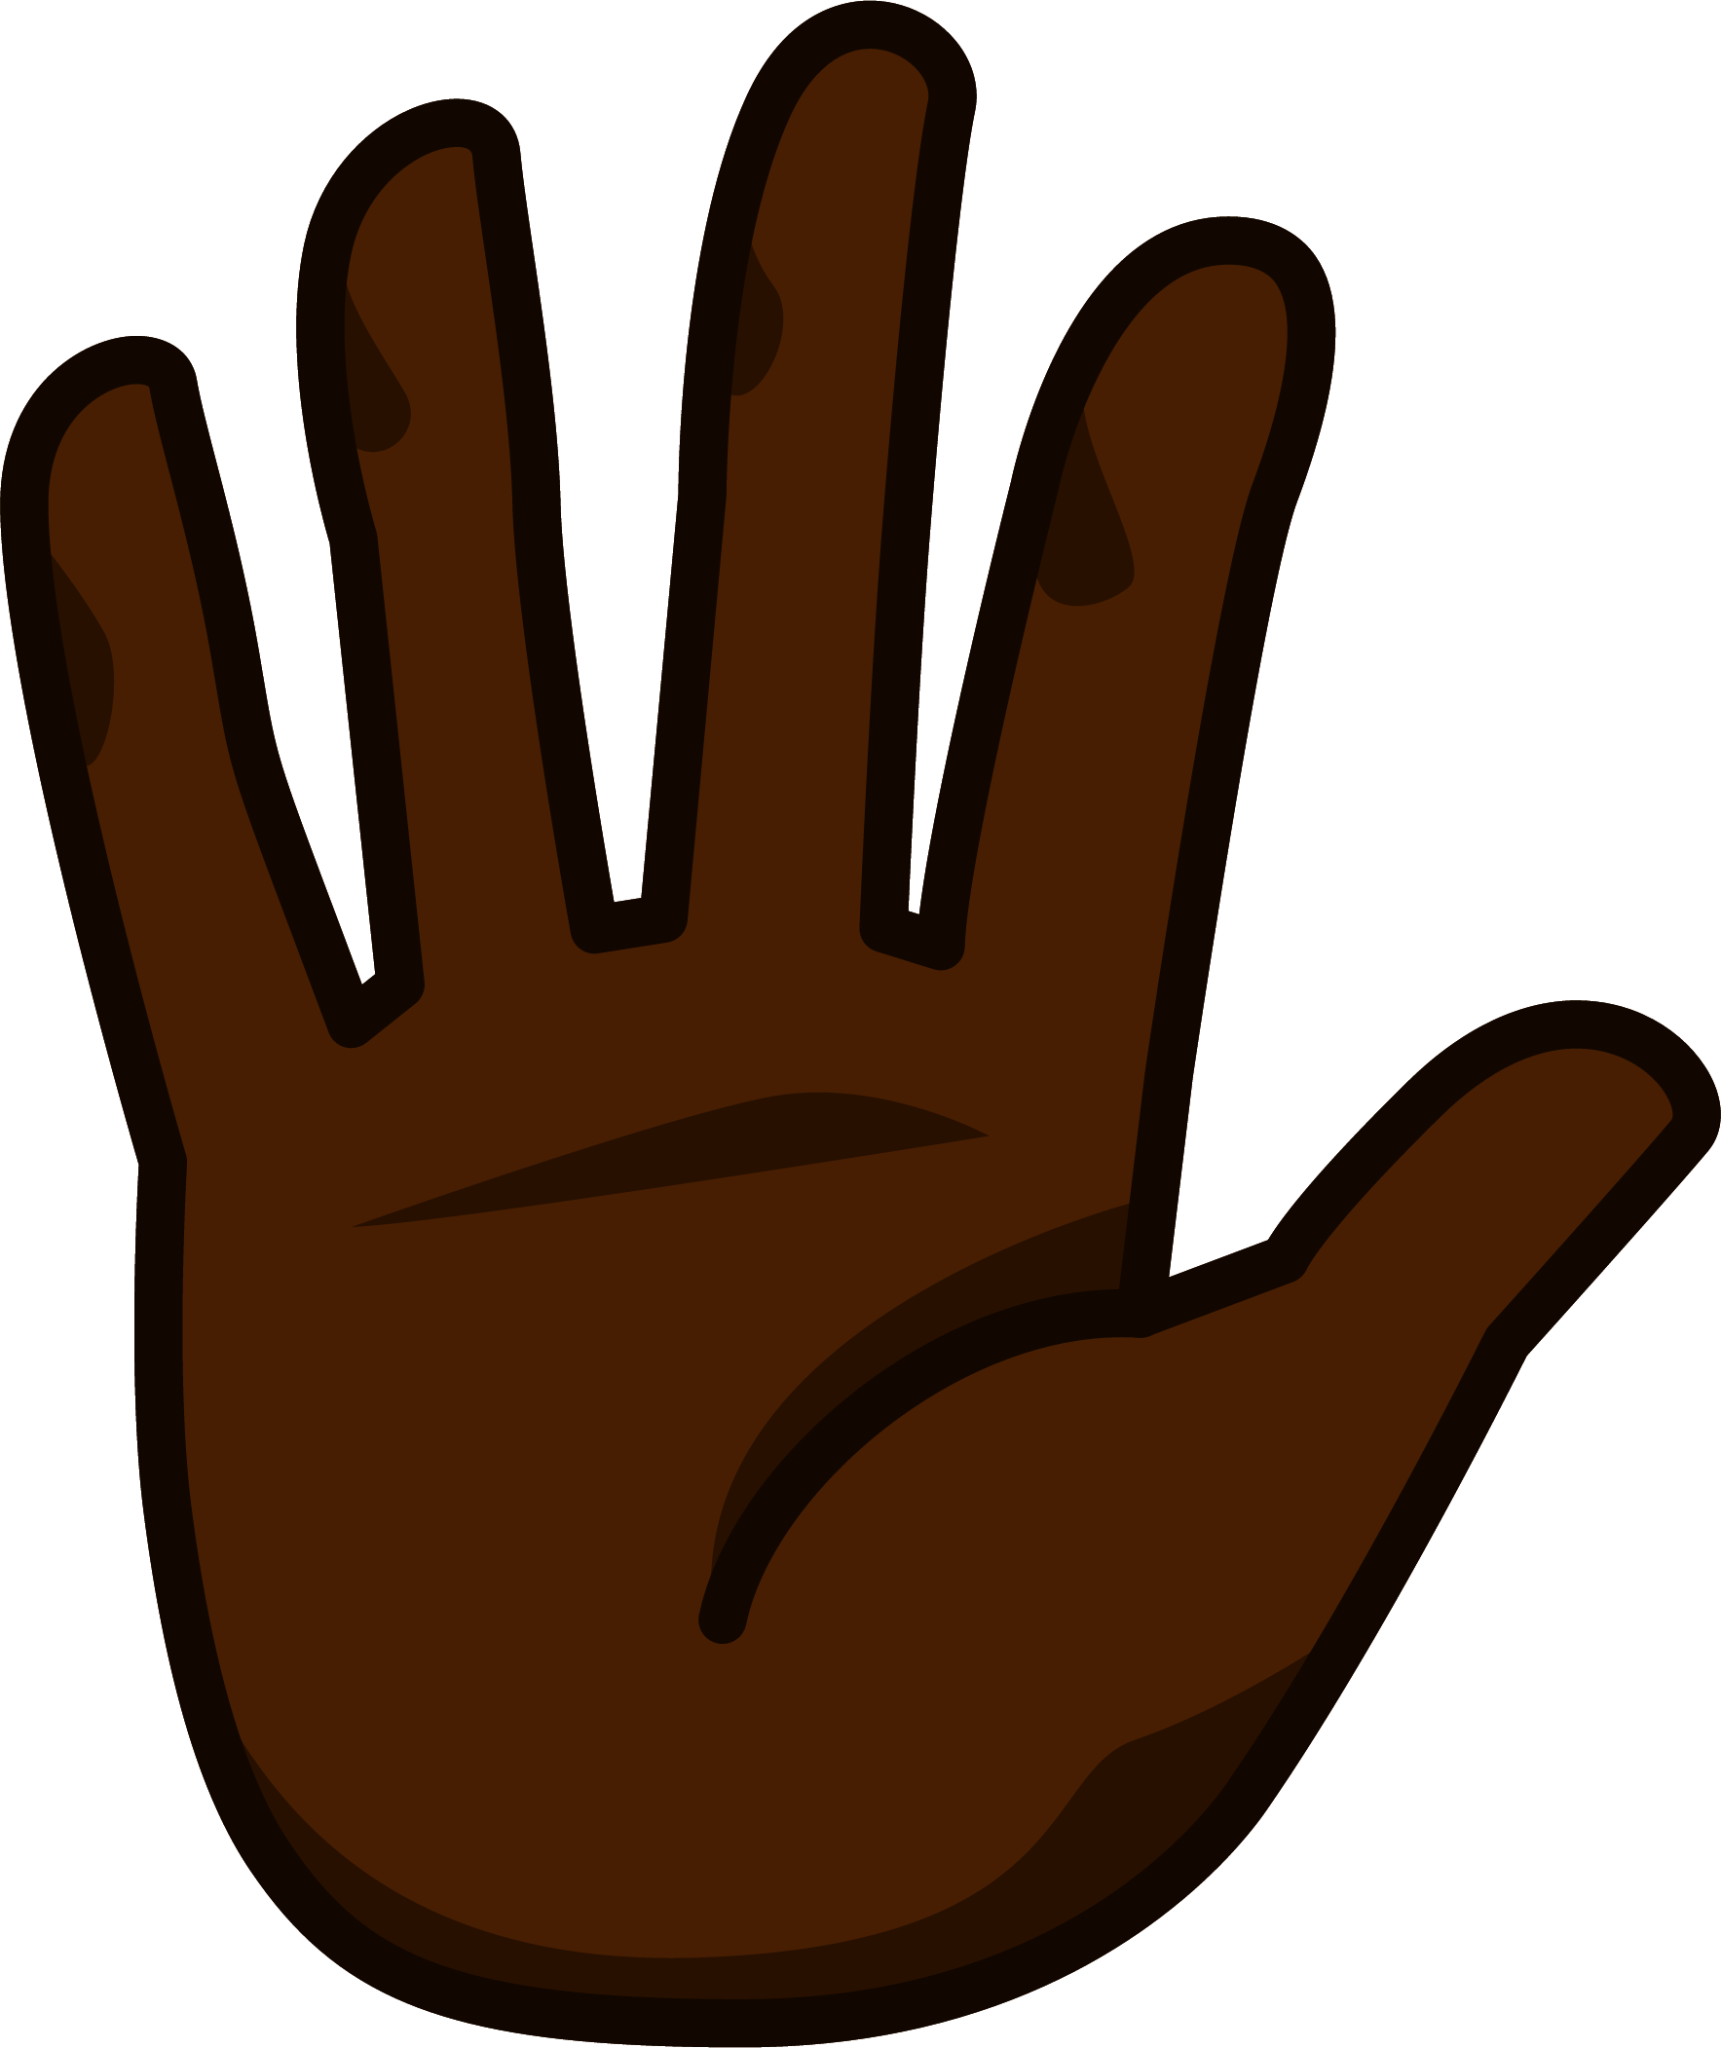 raised hand with fingers splayed (black) emoji